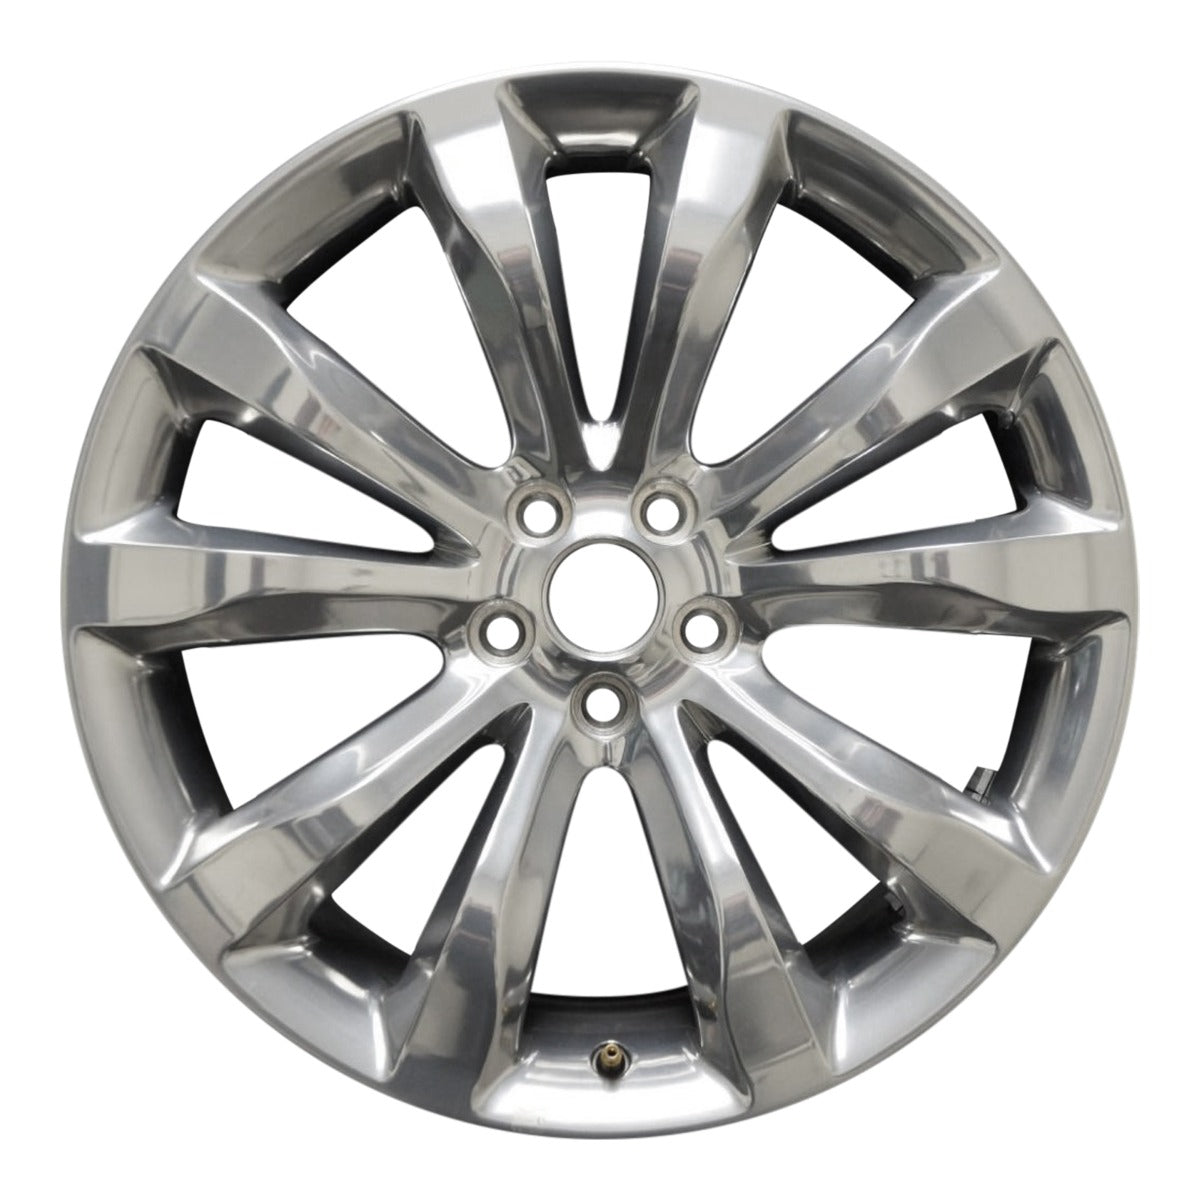 2015 Chrysler 300 New 20" Replacement Wheel Rim RW2540P